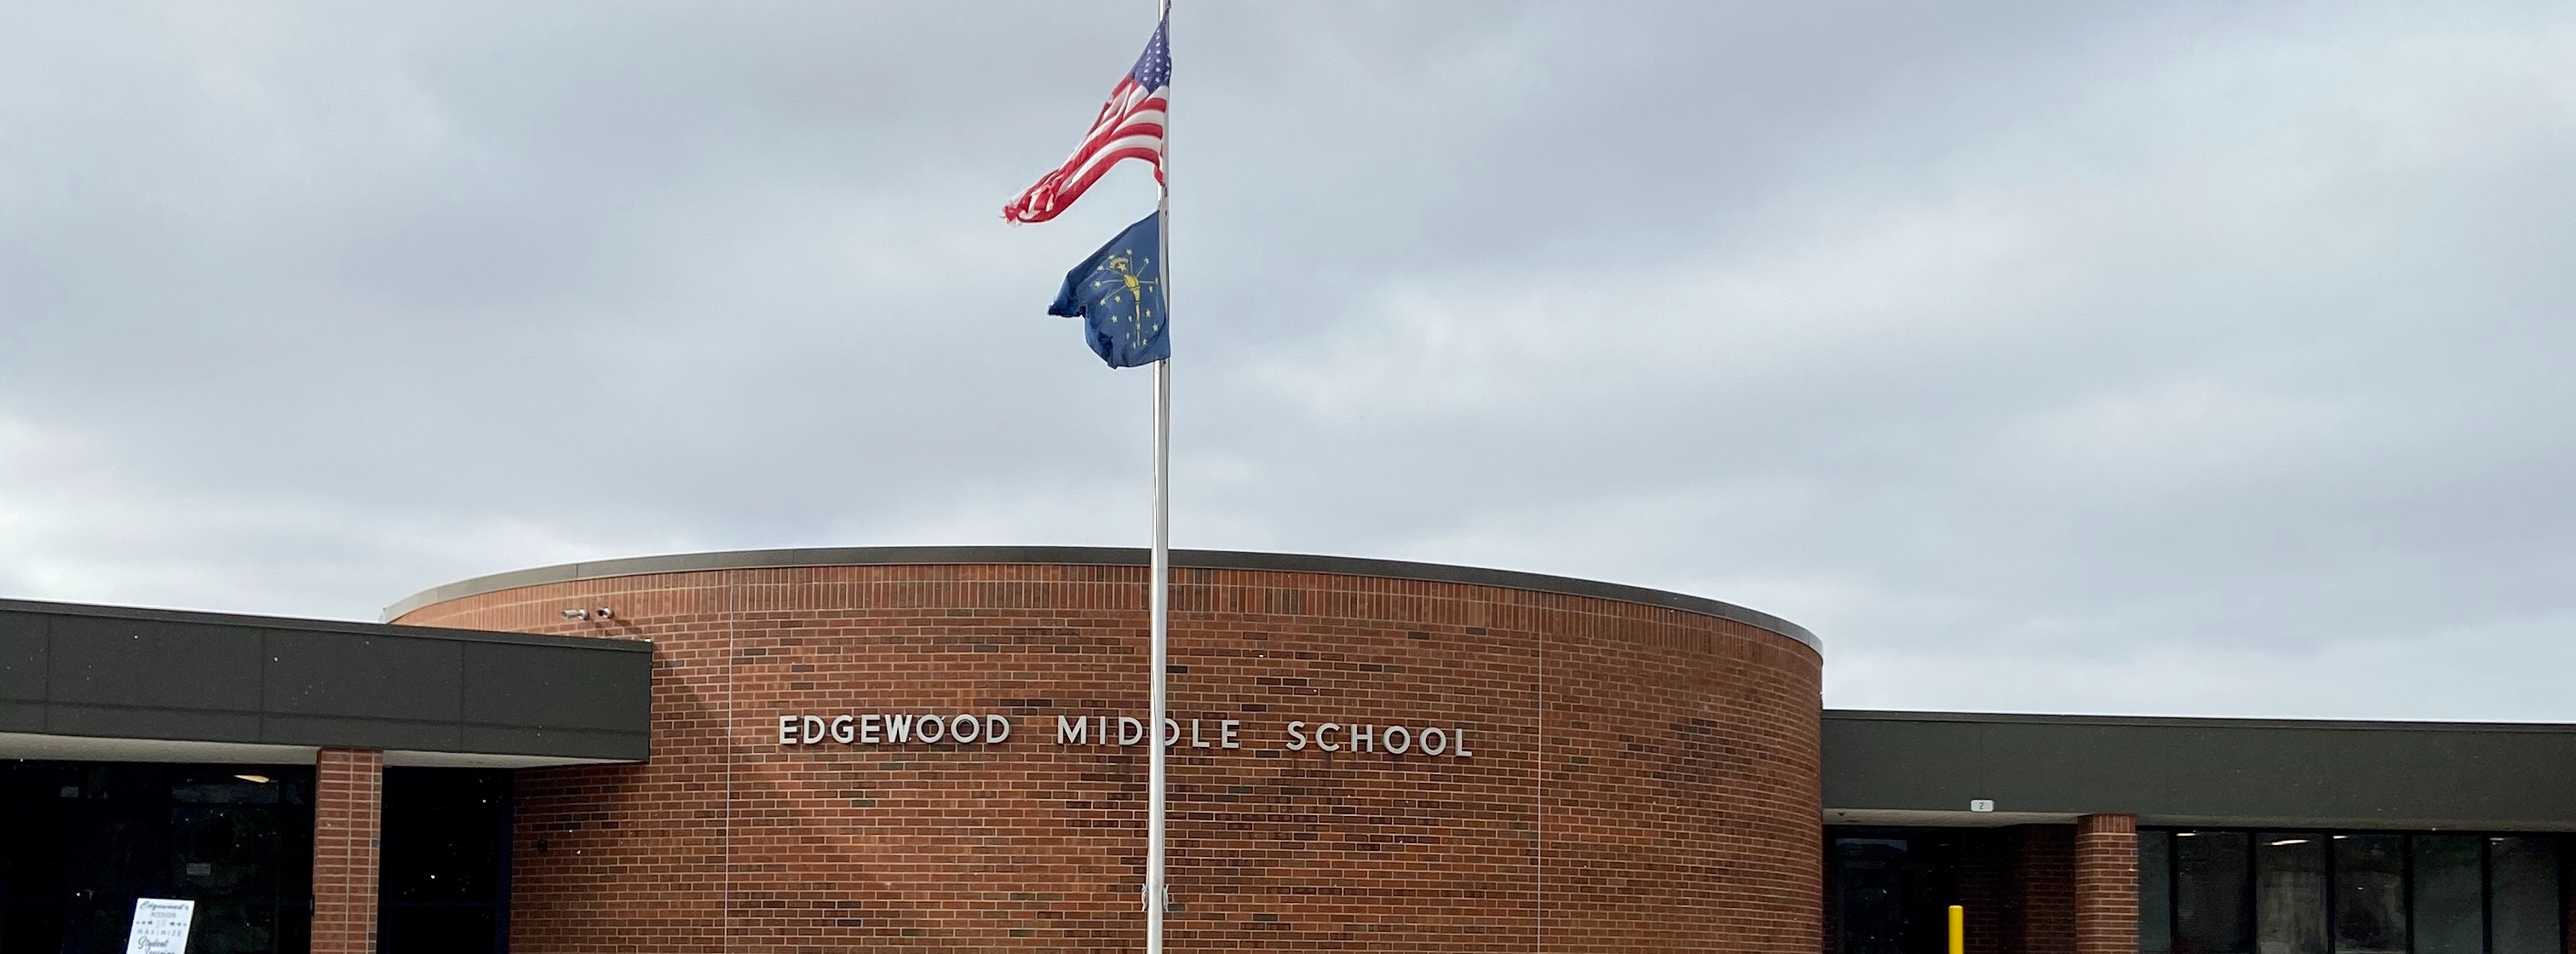 Edgewood Middle School  Building